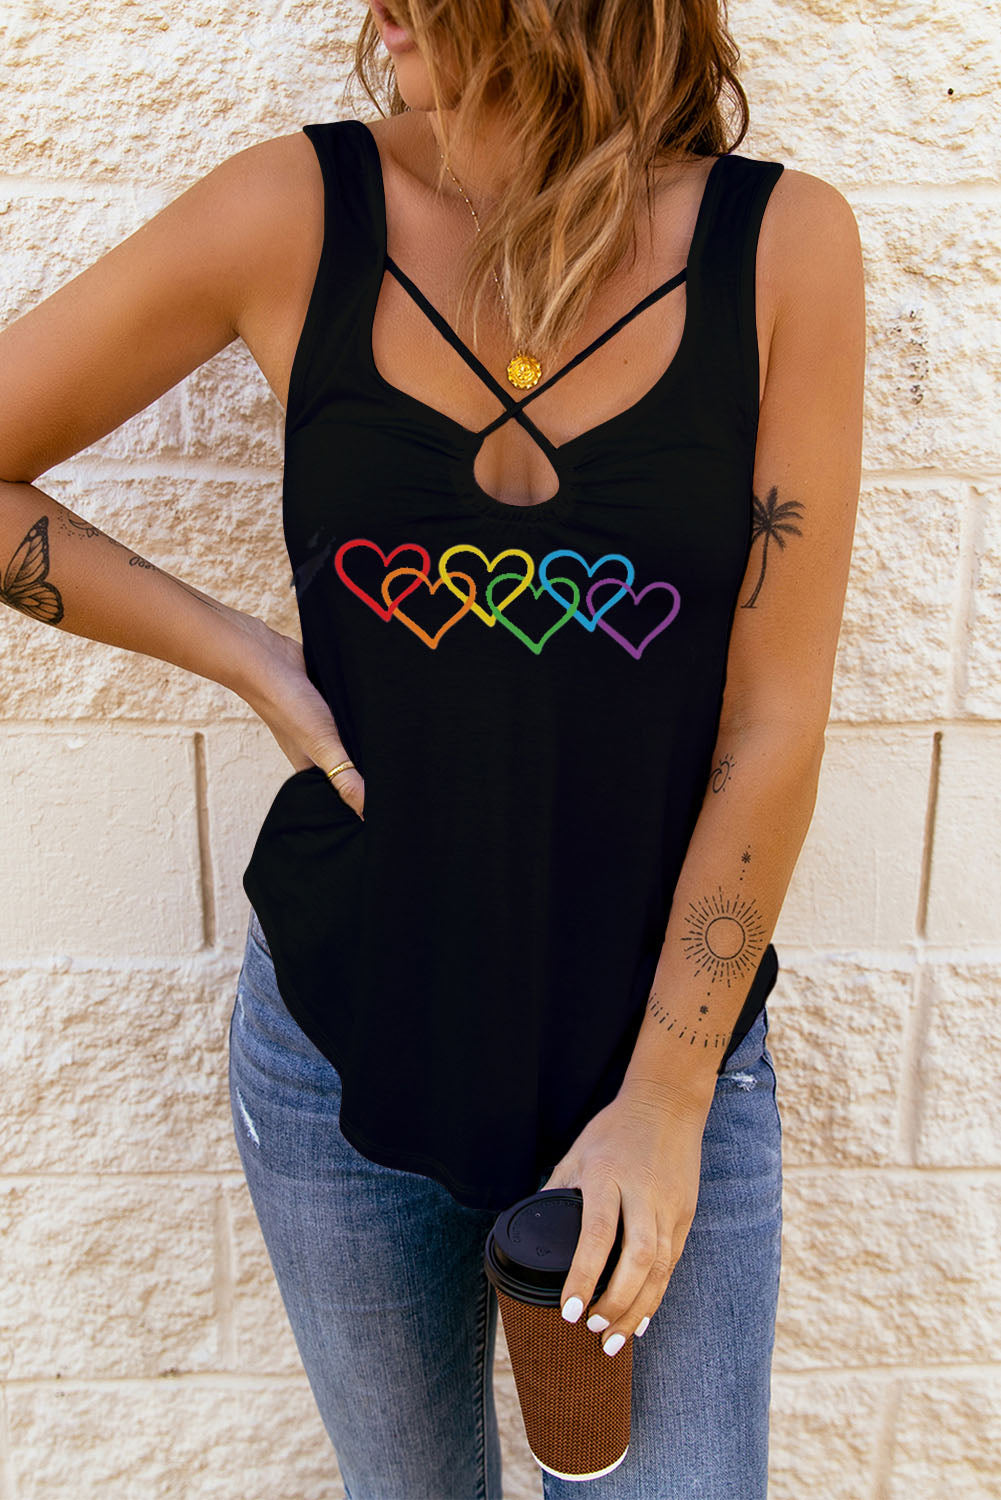 LC2566480-2-S, LC2566480-2-M, LC2566480-2-L, LC2566480-2-XL, LC2566480-2-2XL, Black Womens Tank Tops Pride Rainbow Hearts Crossed Strappy Neck Sleeveless Shirts